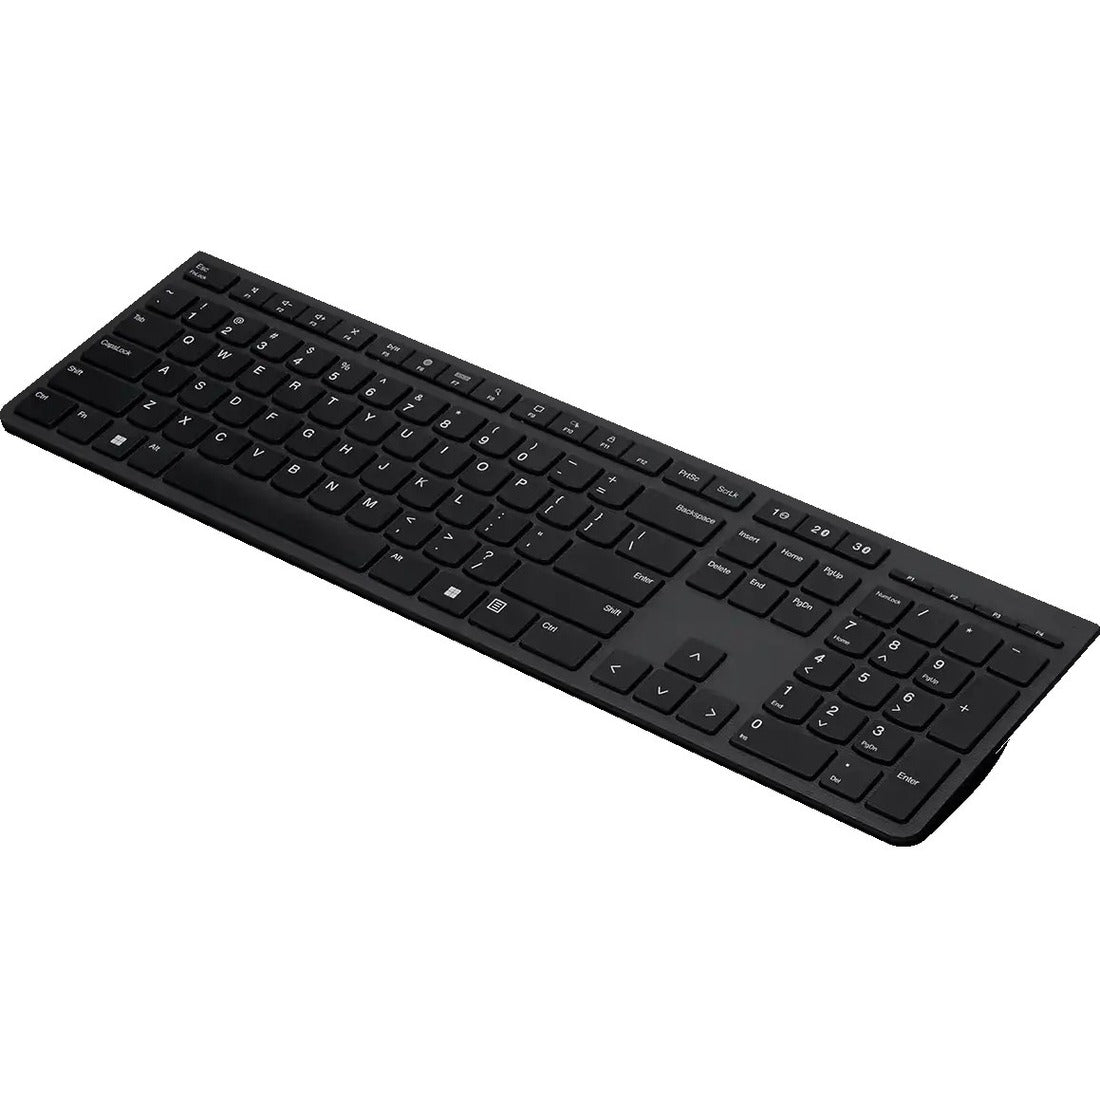 Lenovo Professional Wireless Rechargeable Keyboard -US English - 4Y41K04031